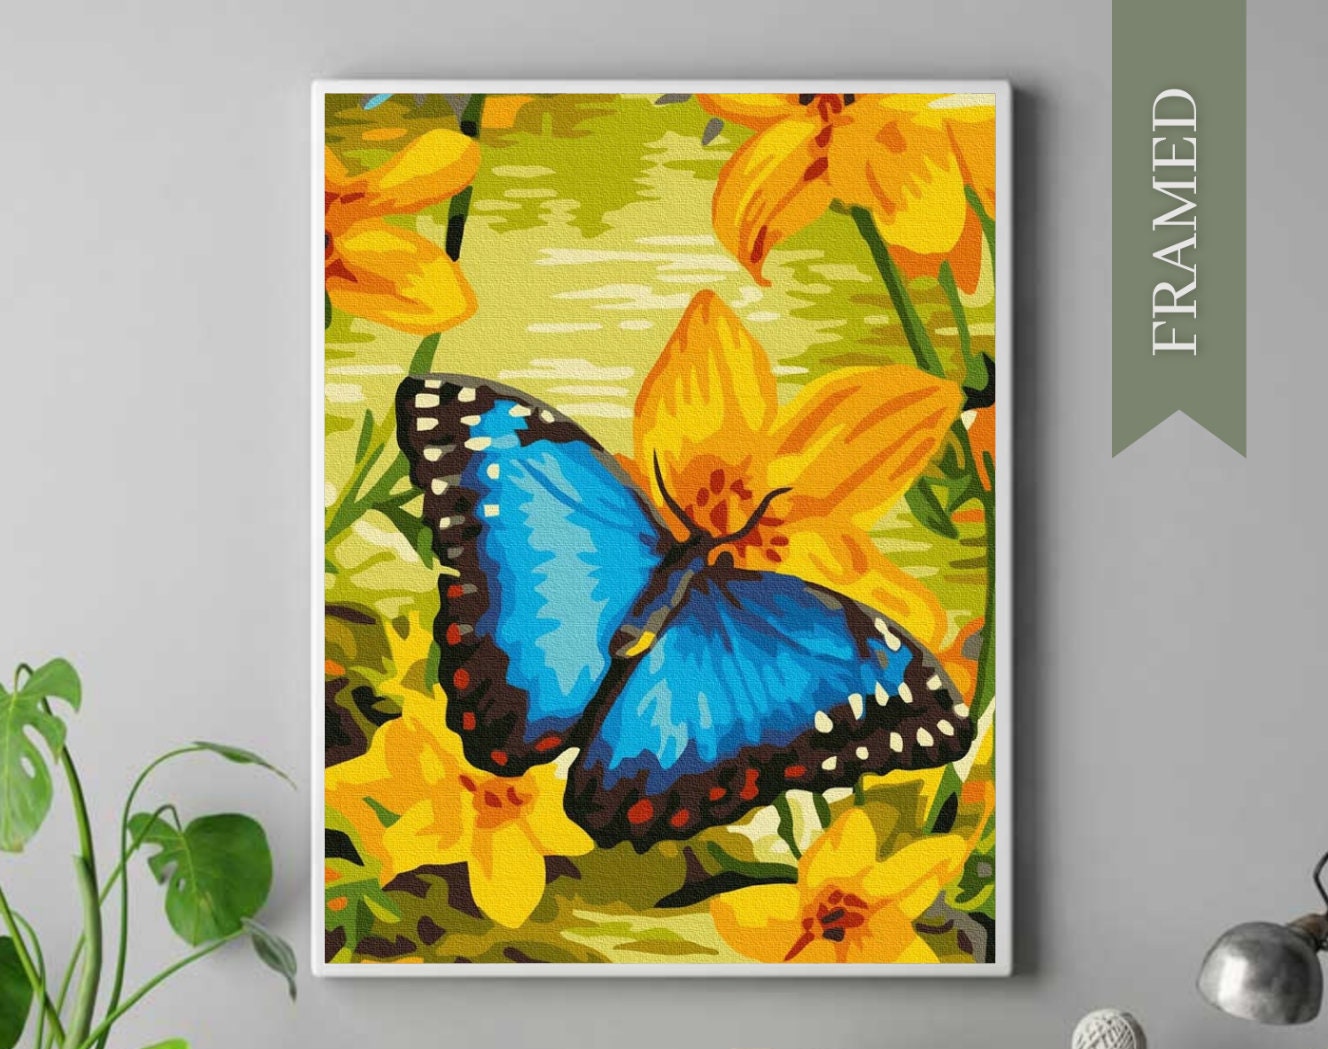 Realistic Paper Butterflies, Double-sided, Faux Butterfly Paper-cut Craft  Cutouts dawn Oak-leaf Butterfly and Blue Buckeye 3 Piece Set 